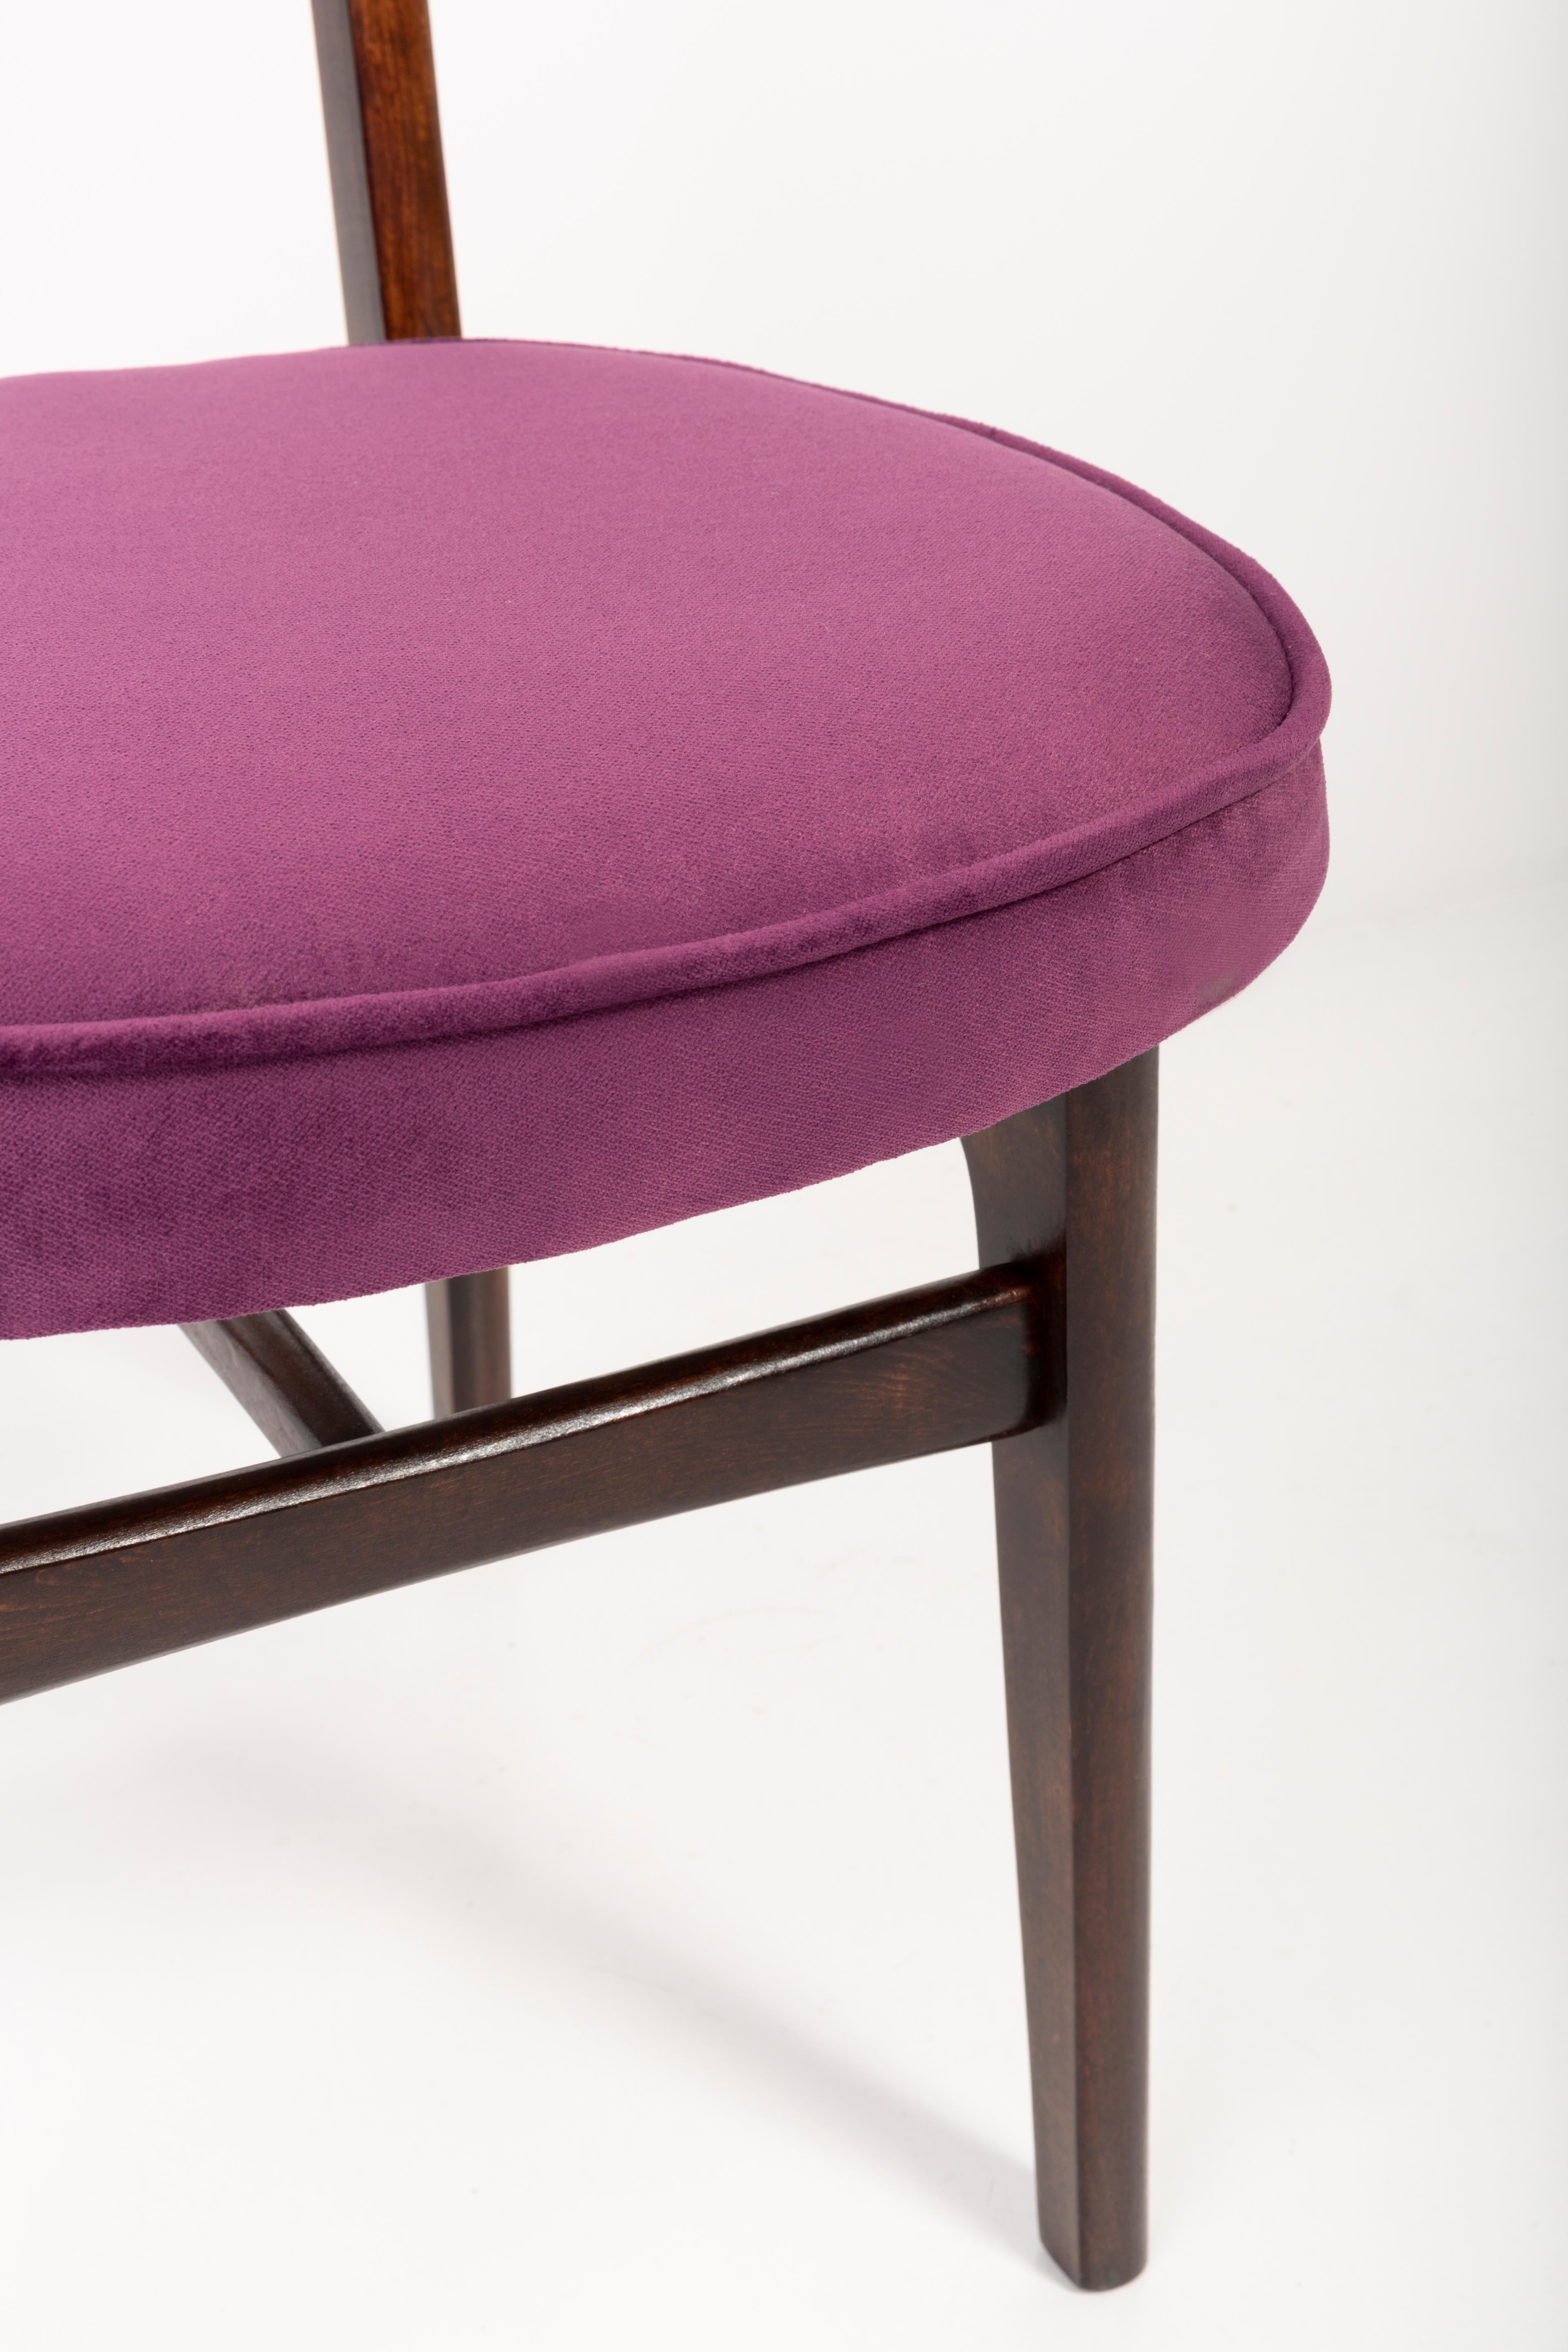 Twelve 20th Century Plum Violet Velvet Rajmund Halas Chairs, Europe, 1960s For Sale 2